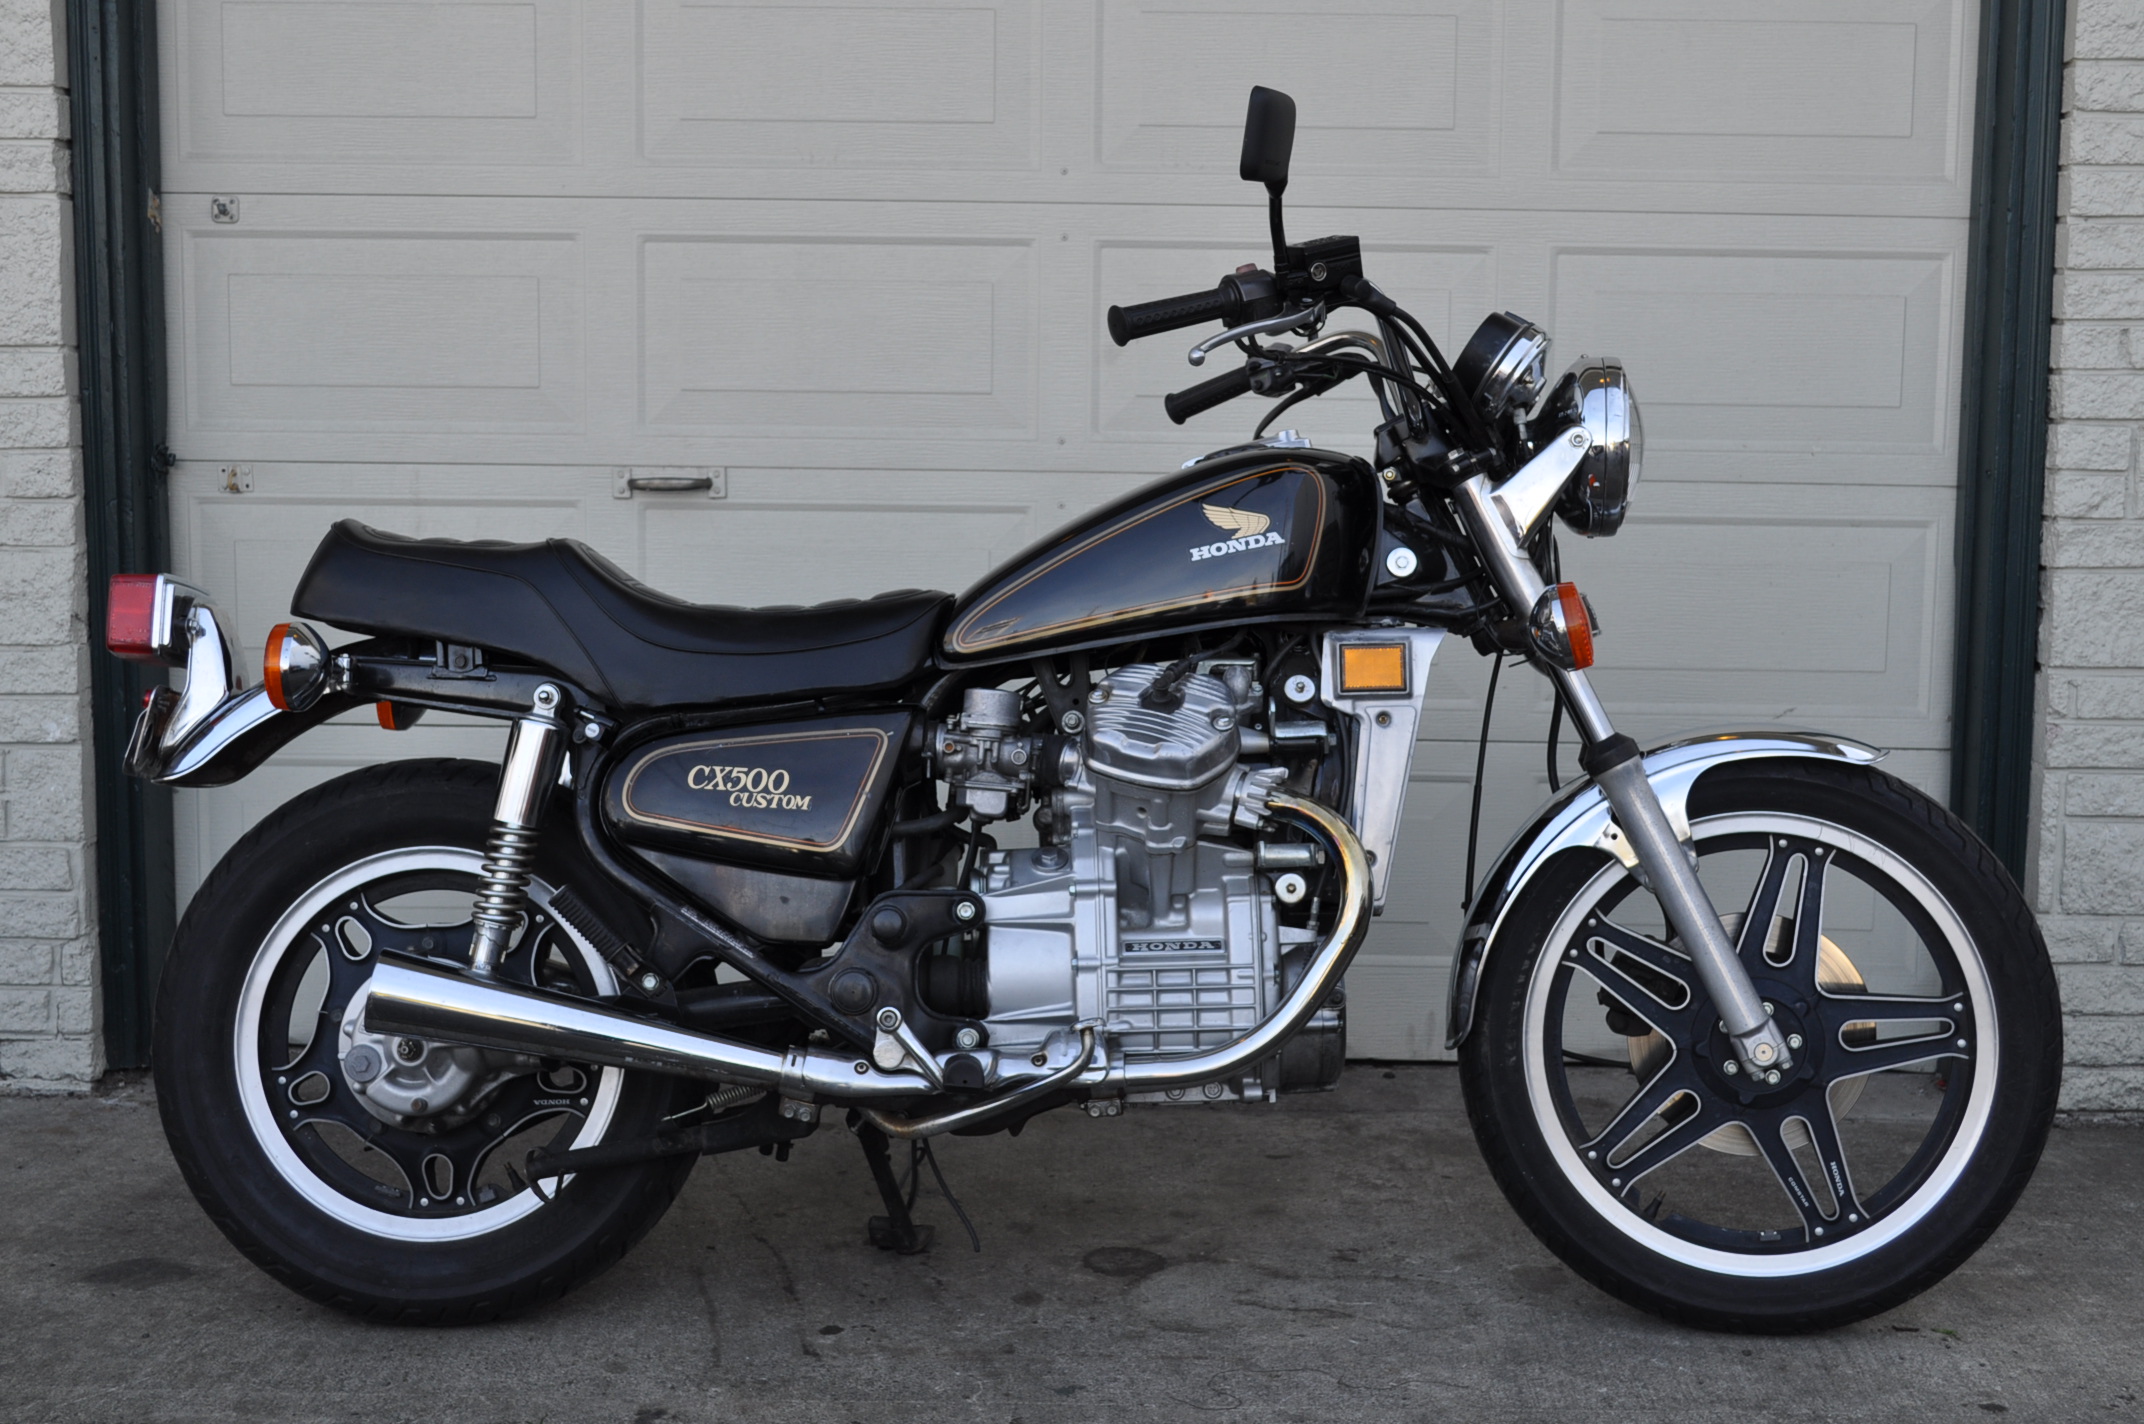 1980 Honda cx500 | Custom Cafe Racer Motorcycles For Sale